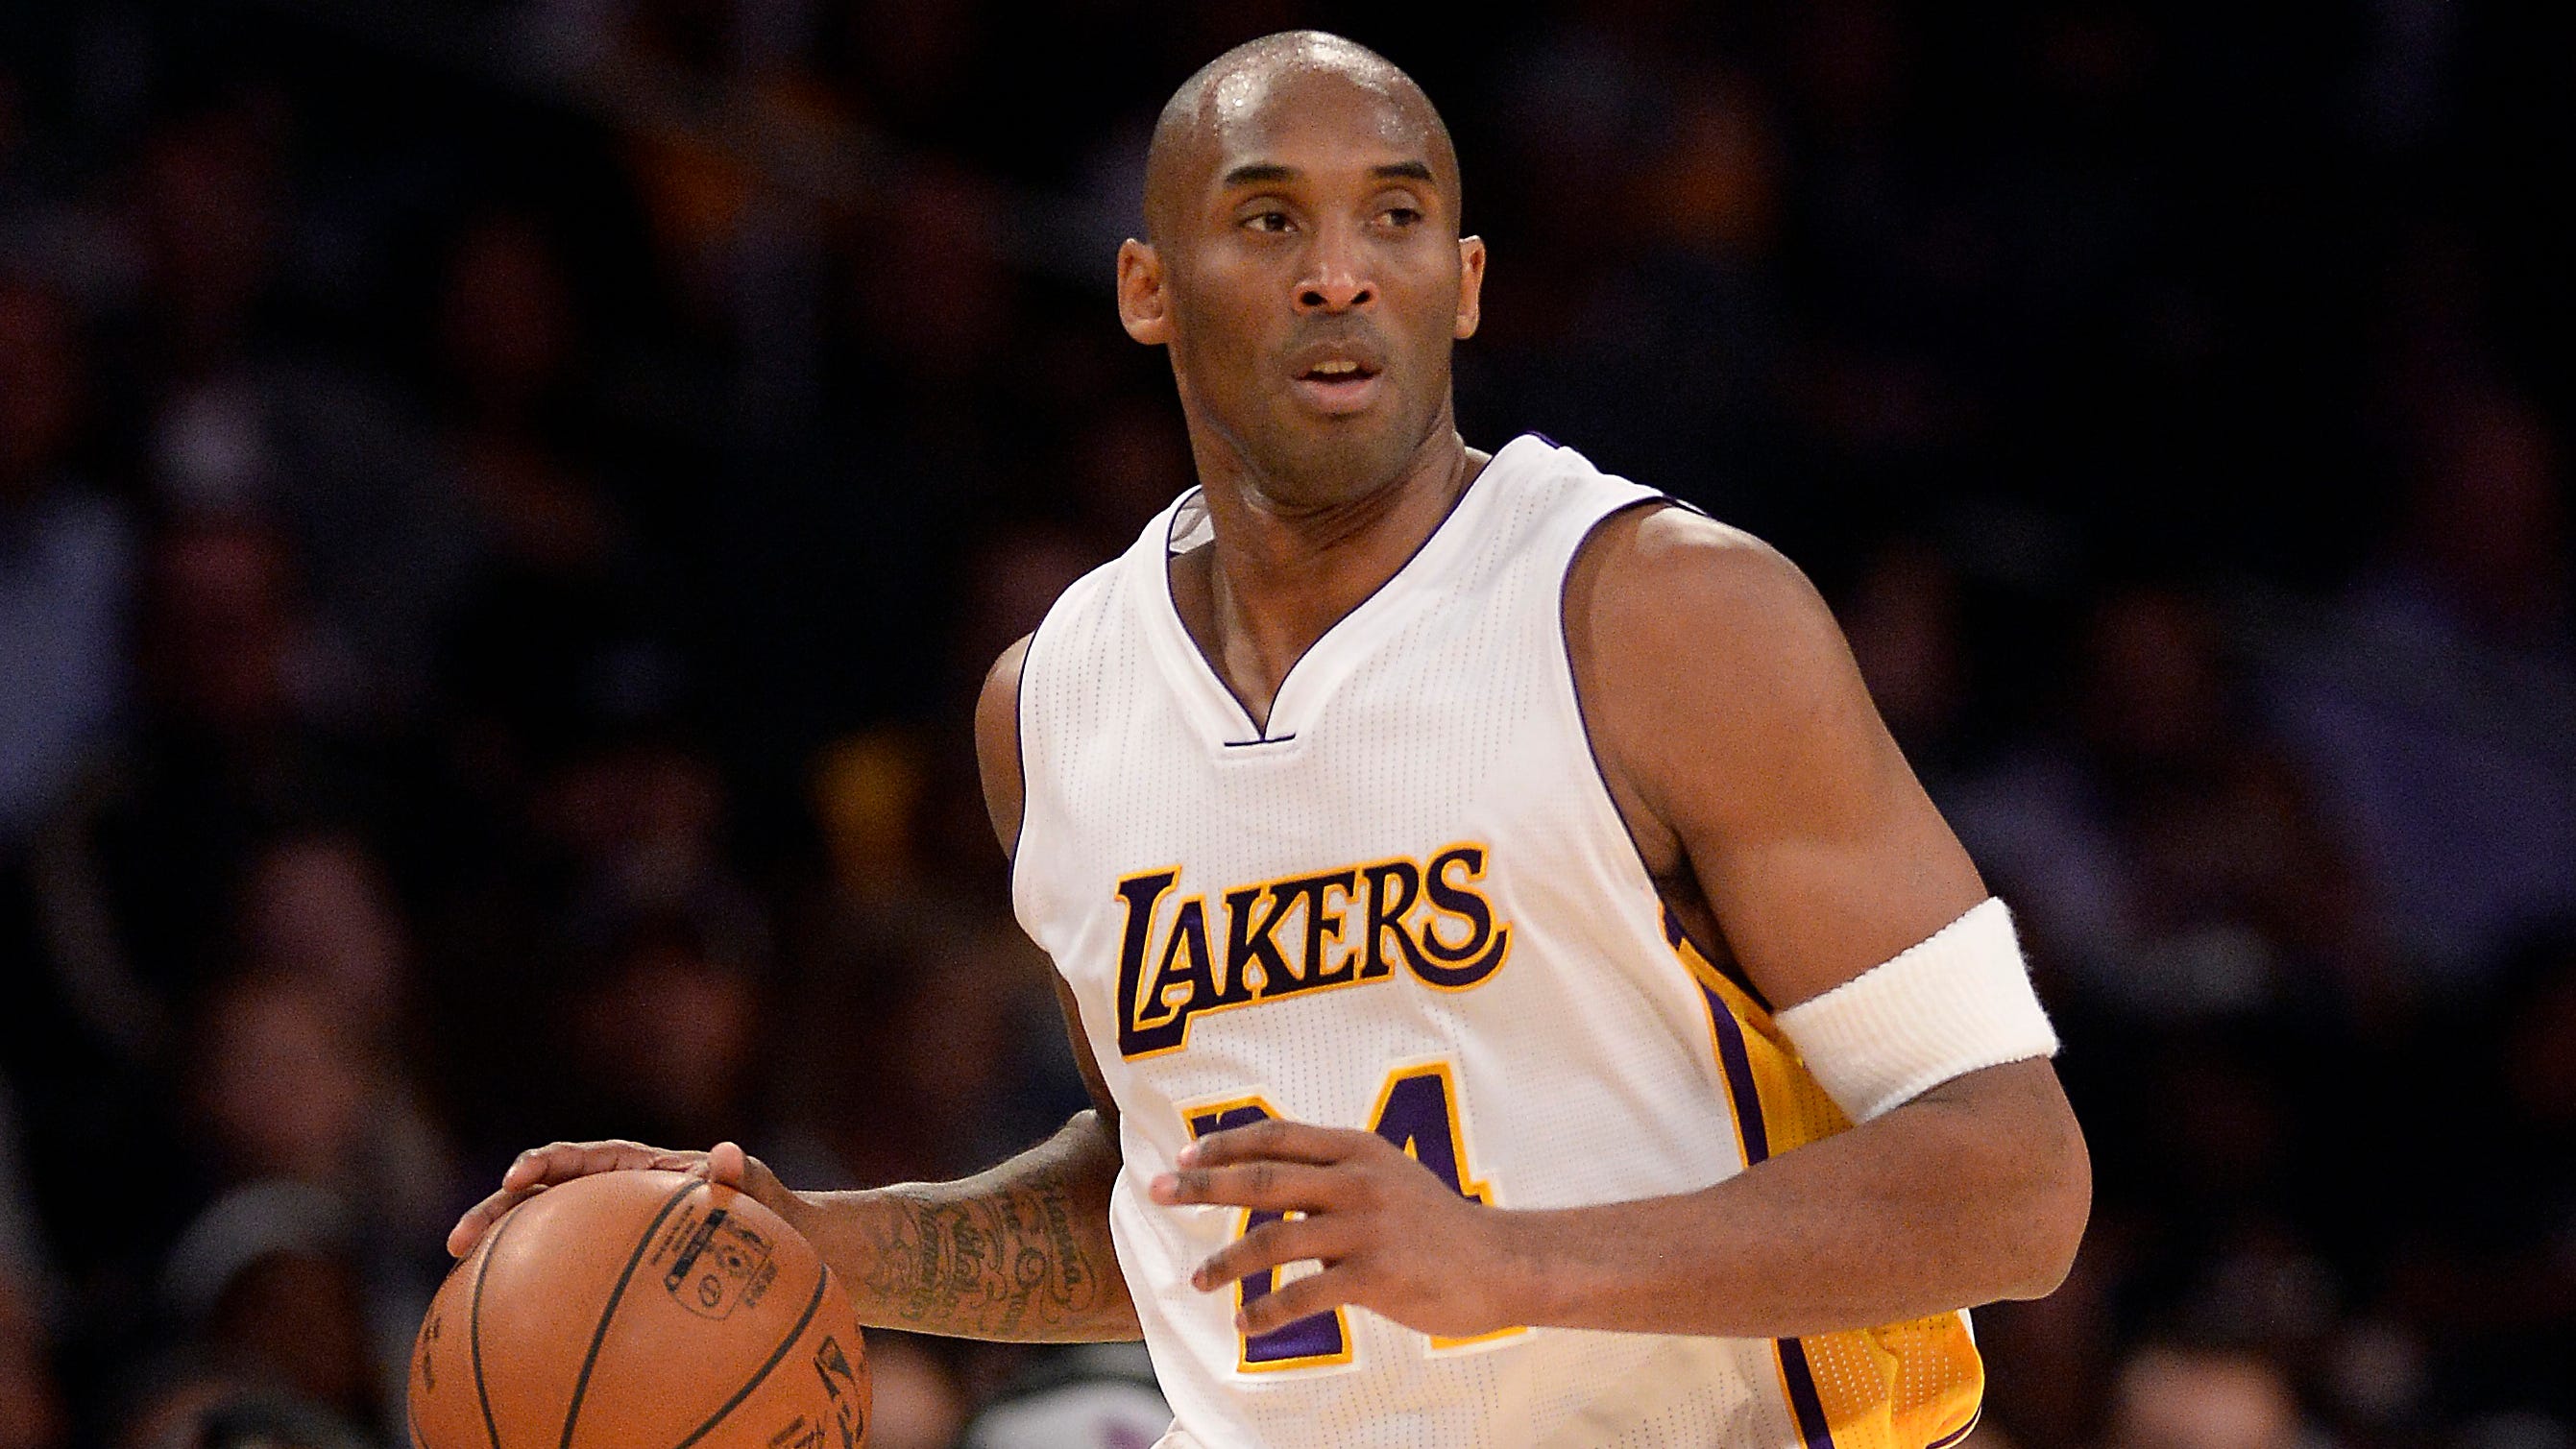 Kobe Bryant, NBA legend, dies at 41 in helicopter crash in California